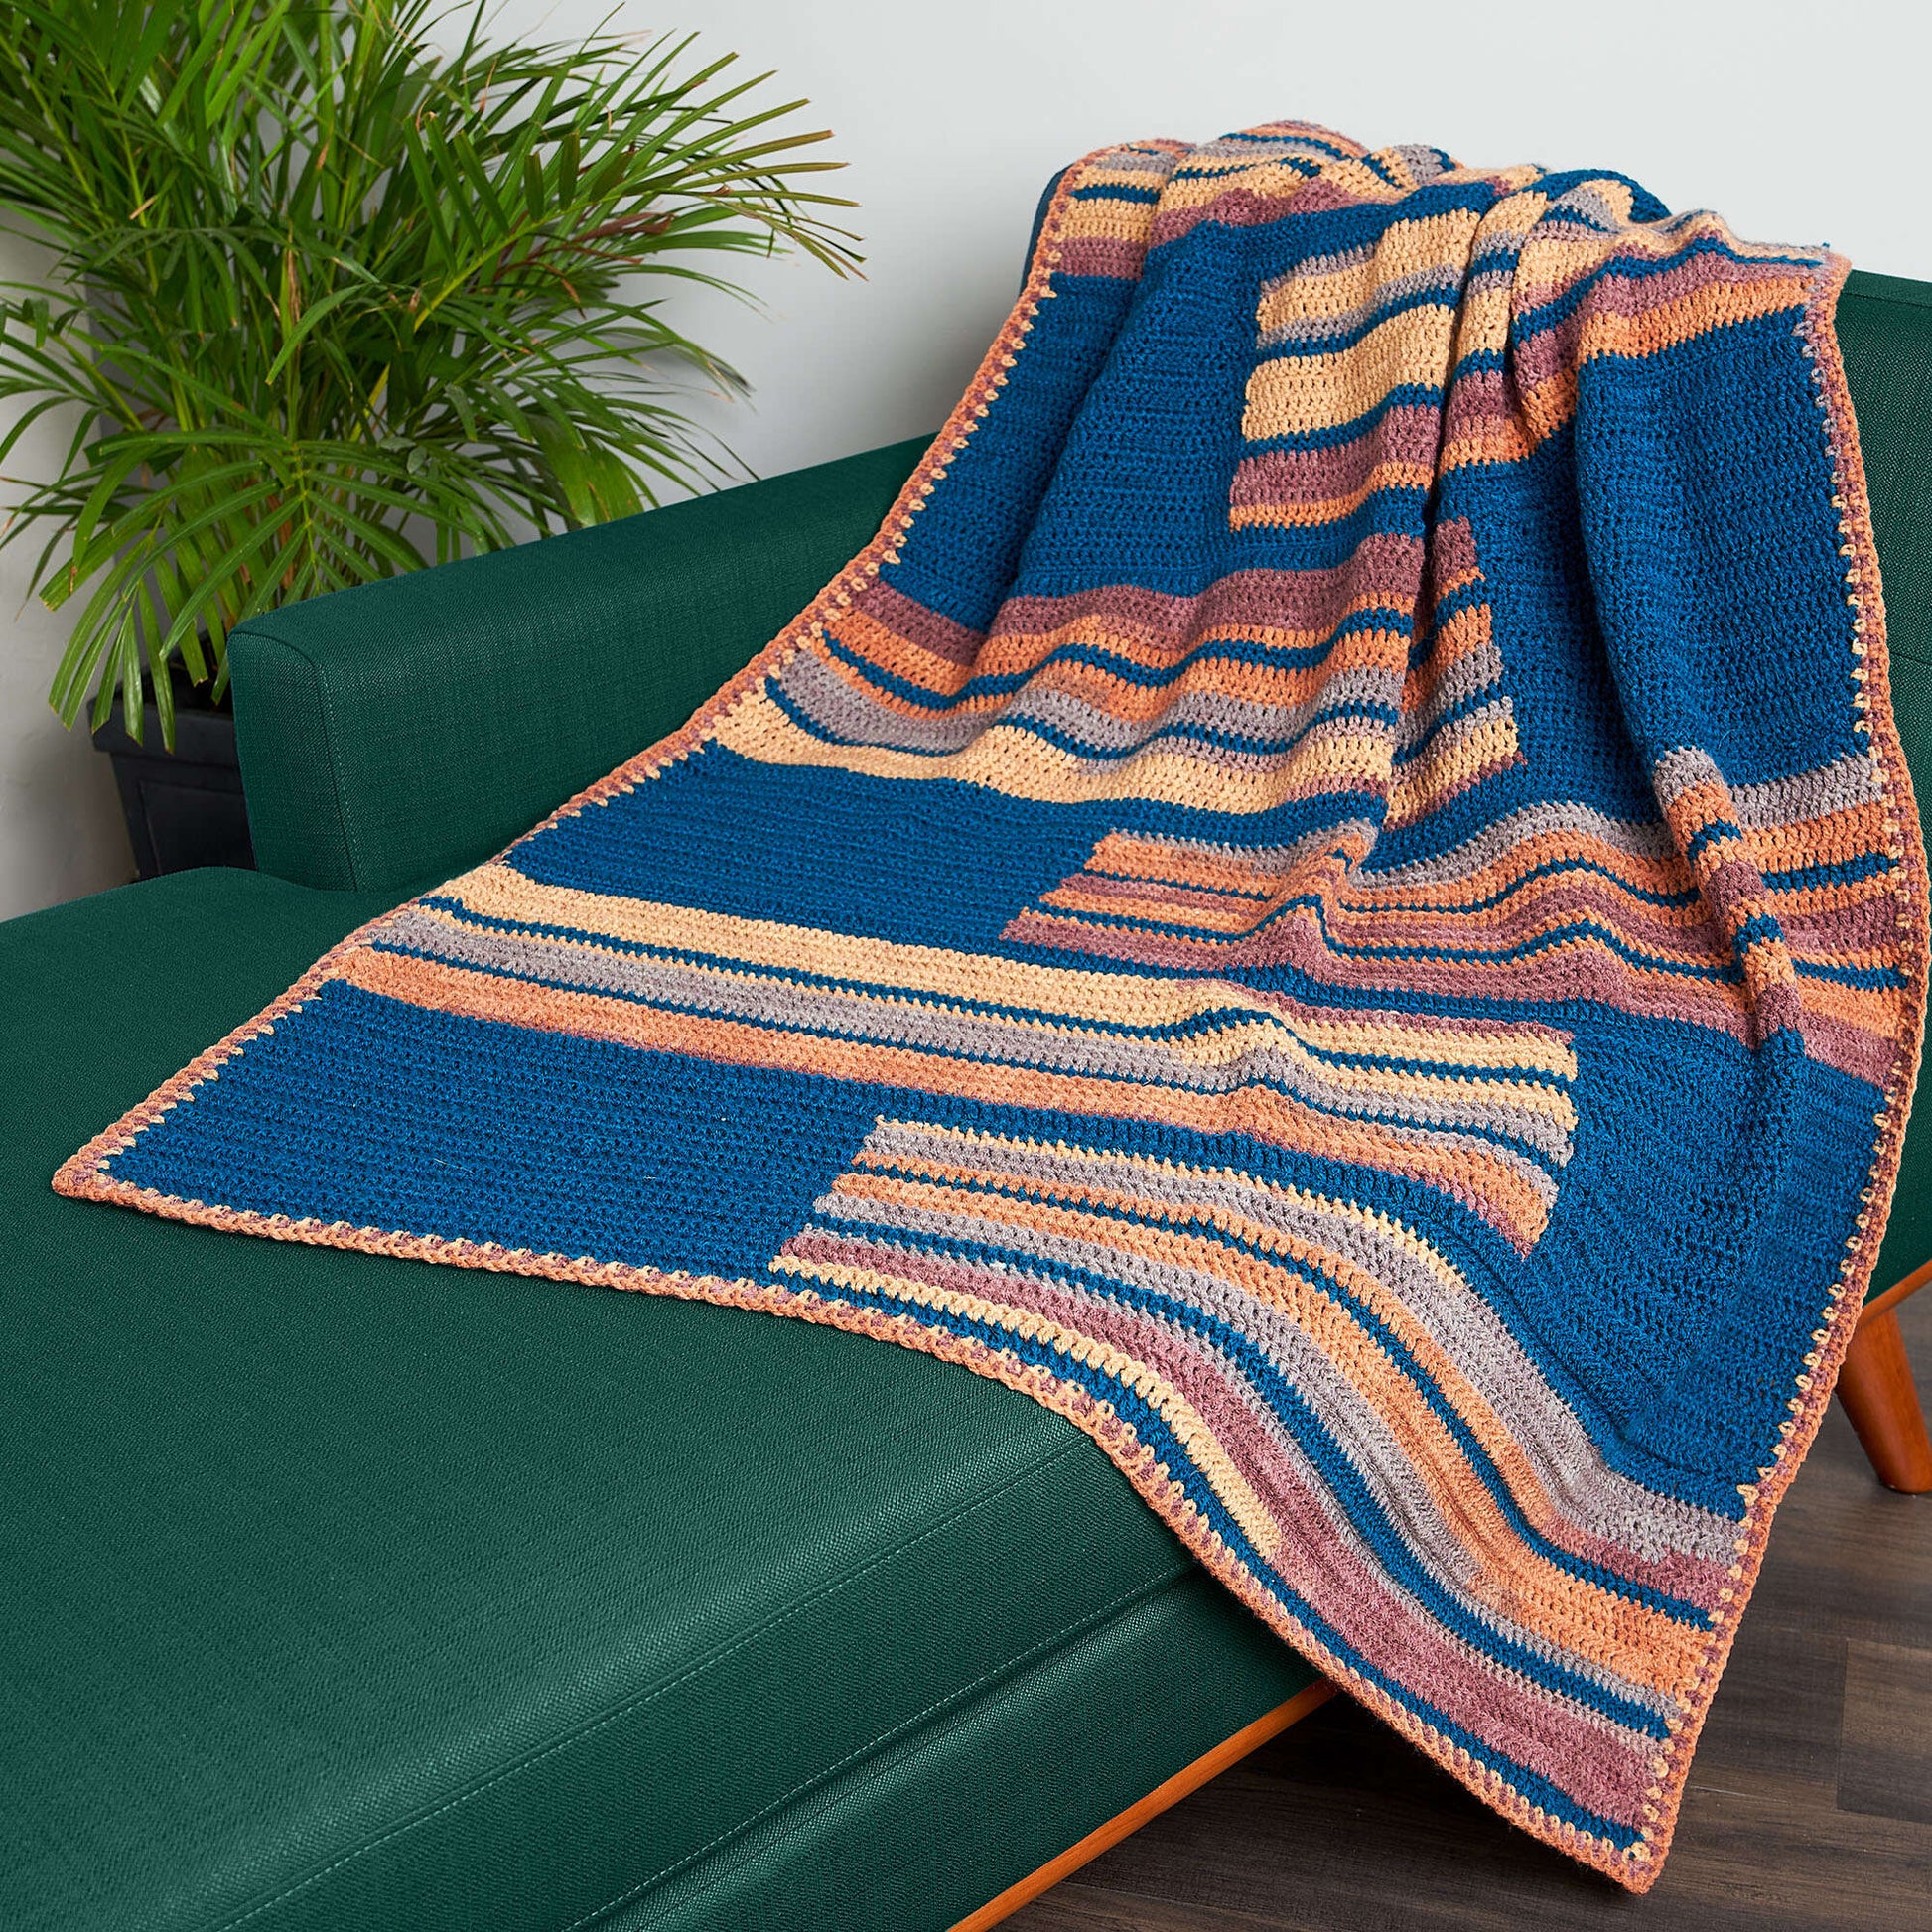 Free Caron Crochet Topsy Turvy Blanket Pattern